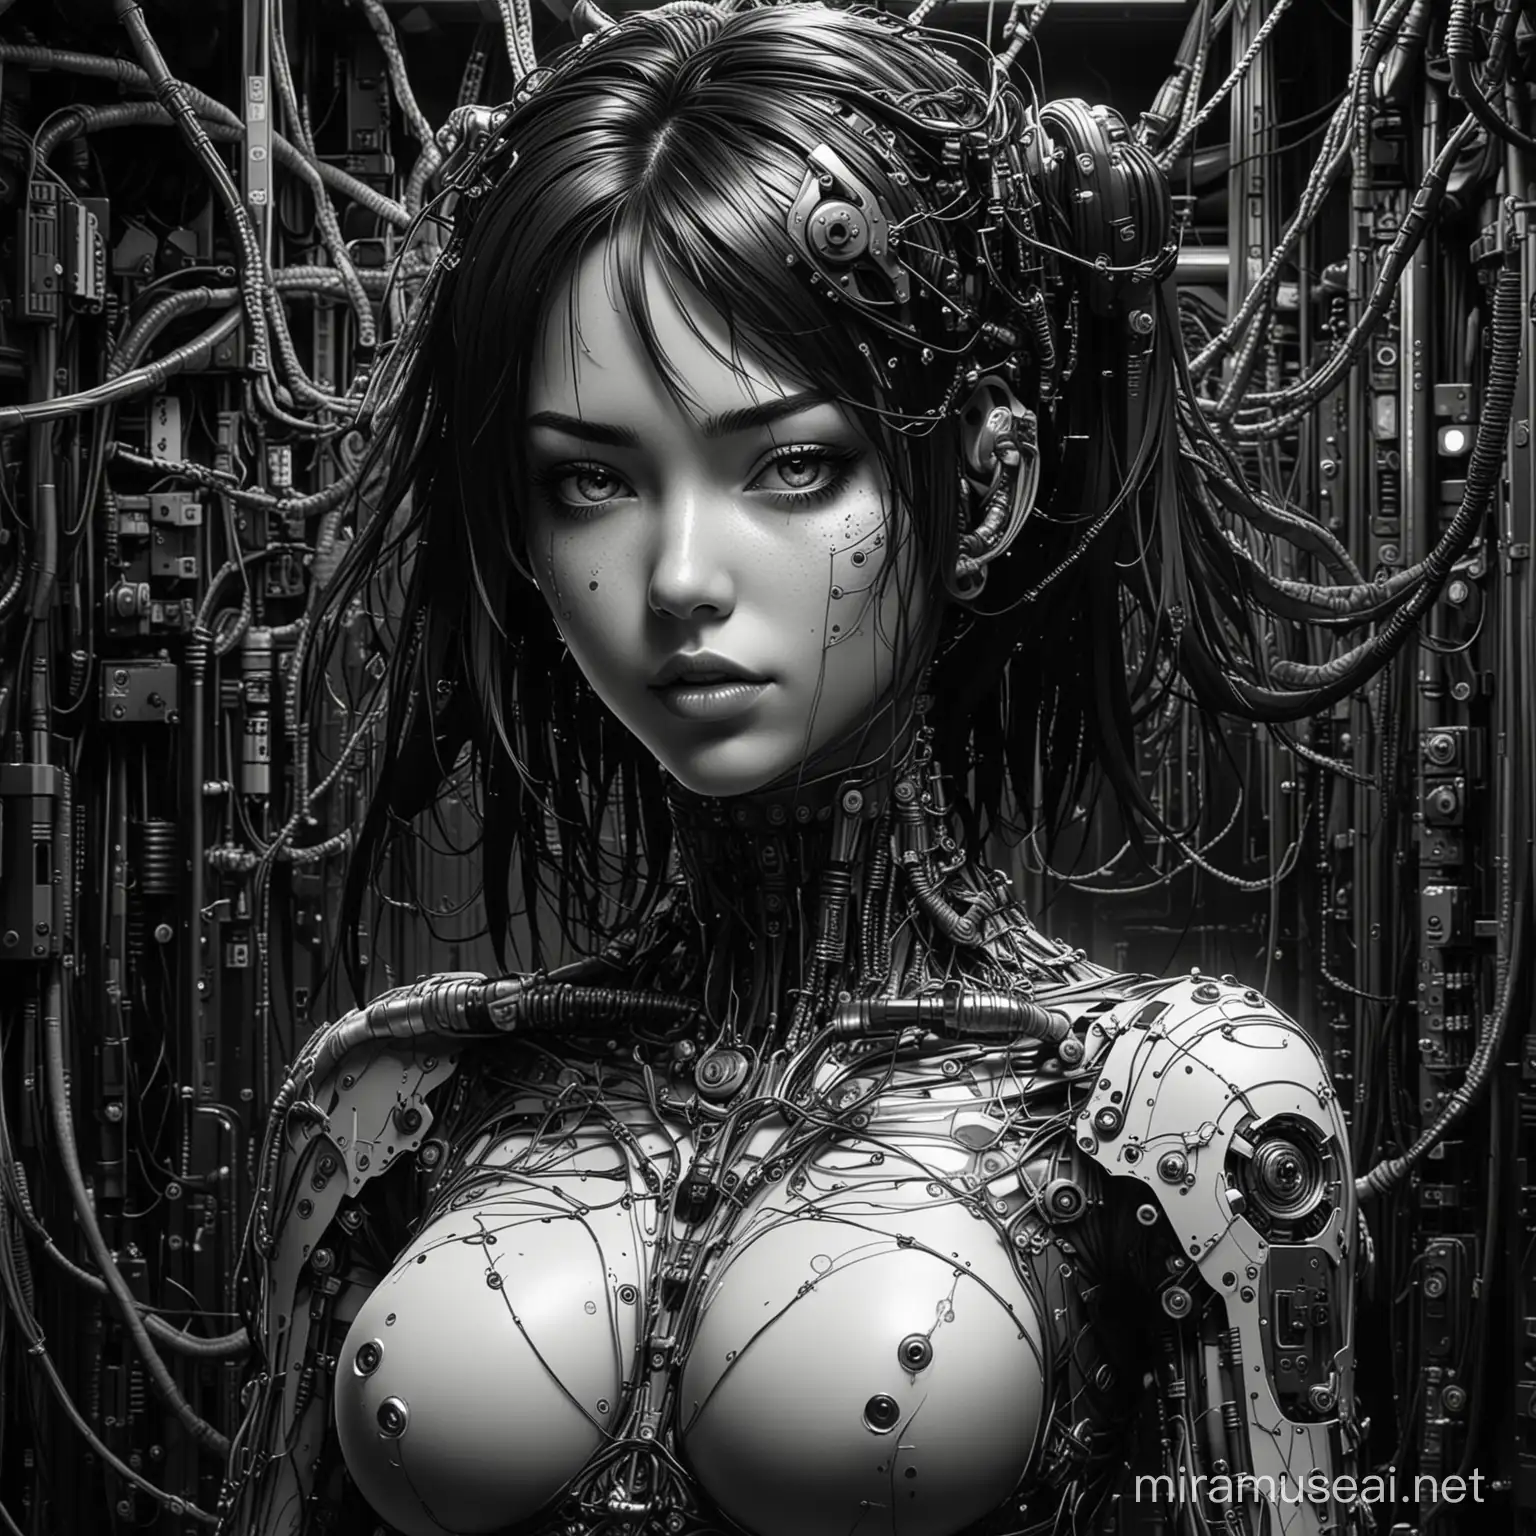 Futuristic Cyberpunk Xenotrip Girl in Intricate Manga Art Style